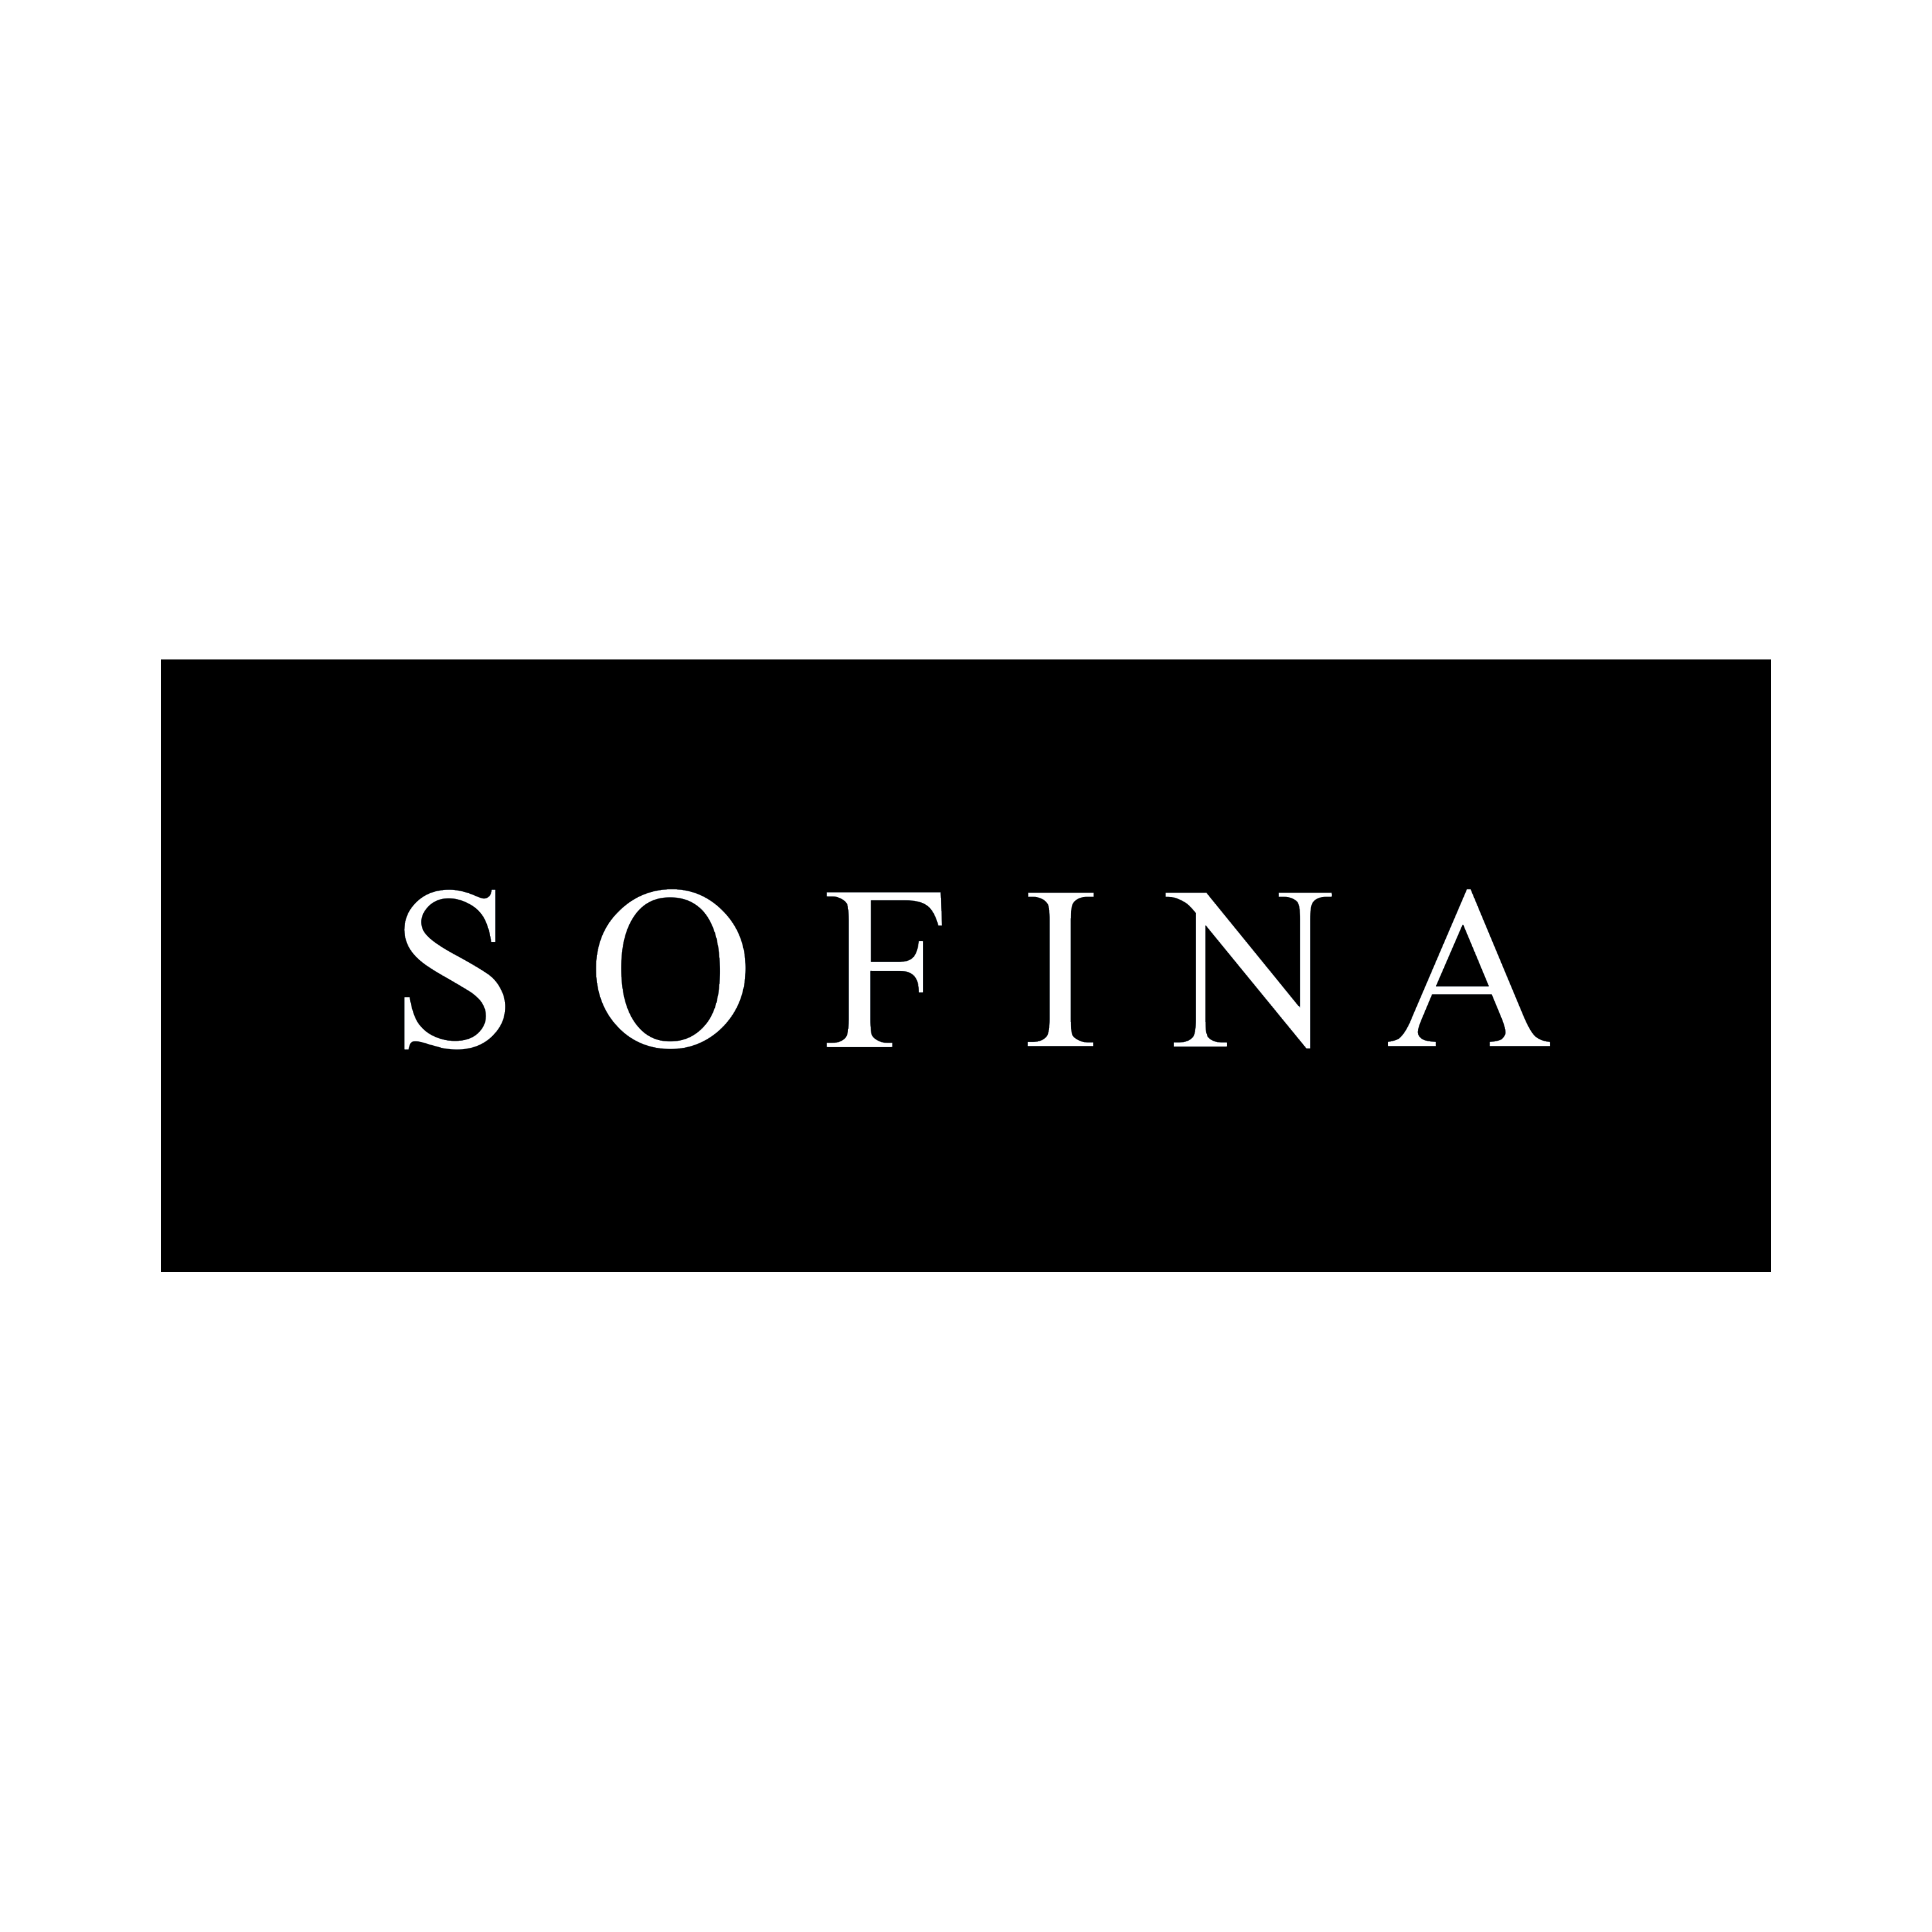 Sofina Logo Transparent Picture